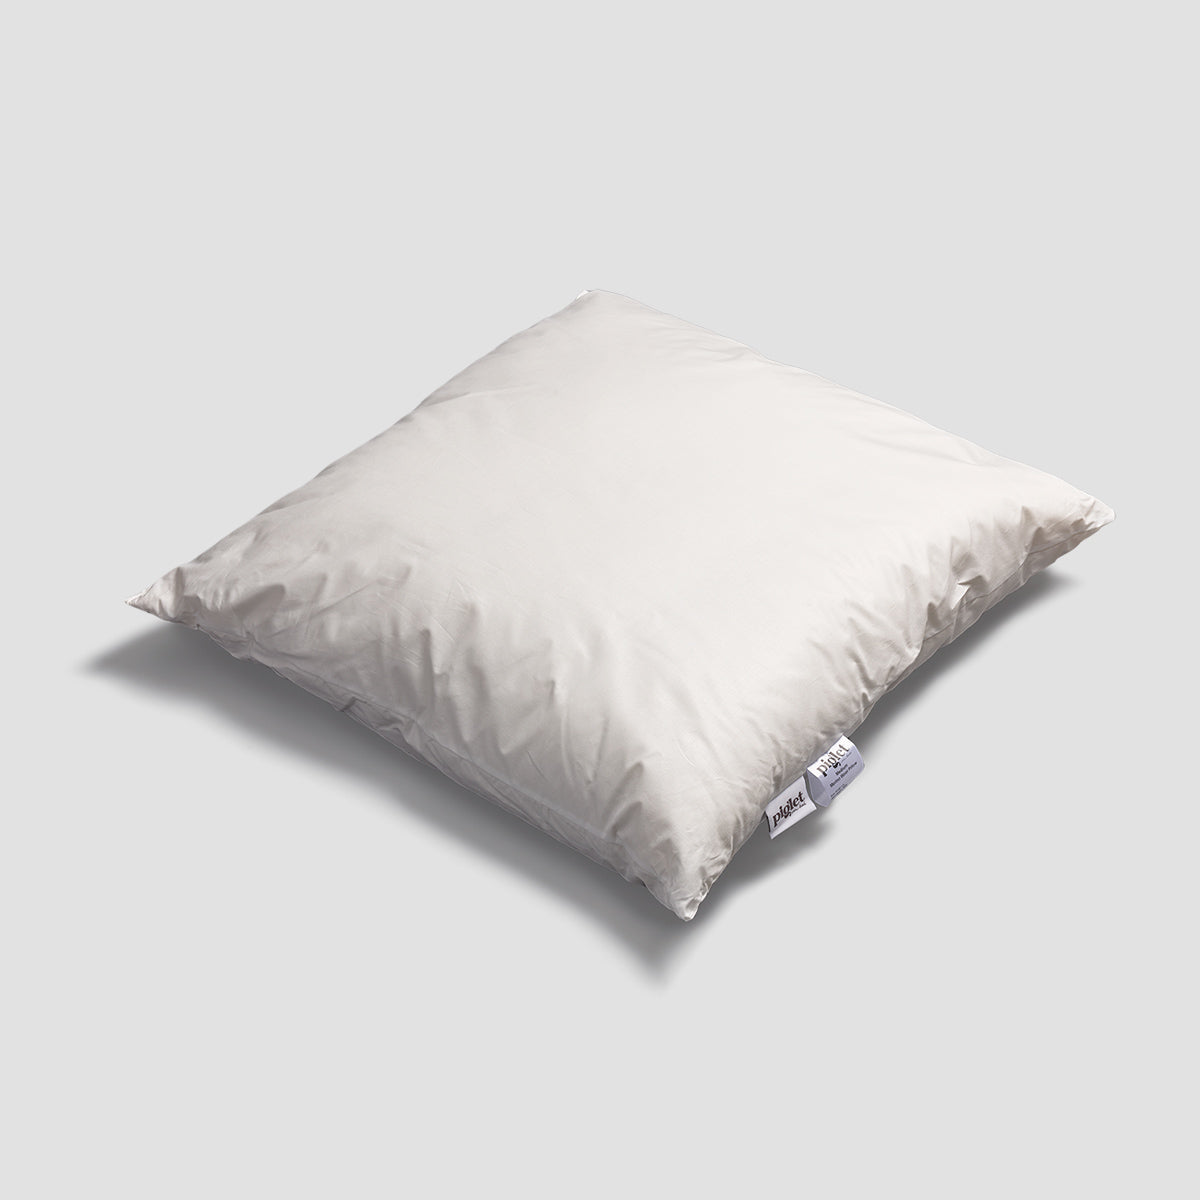 Square Merino Wool Pillow